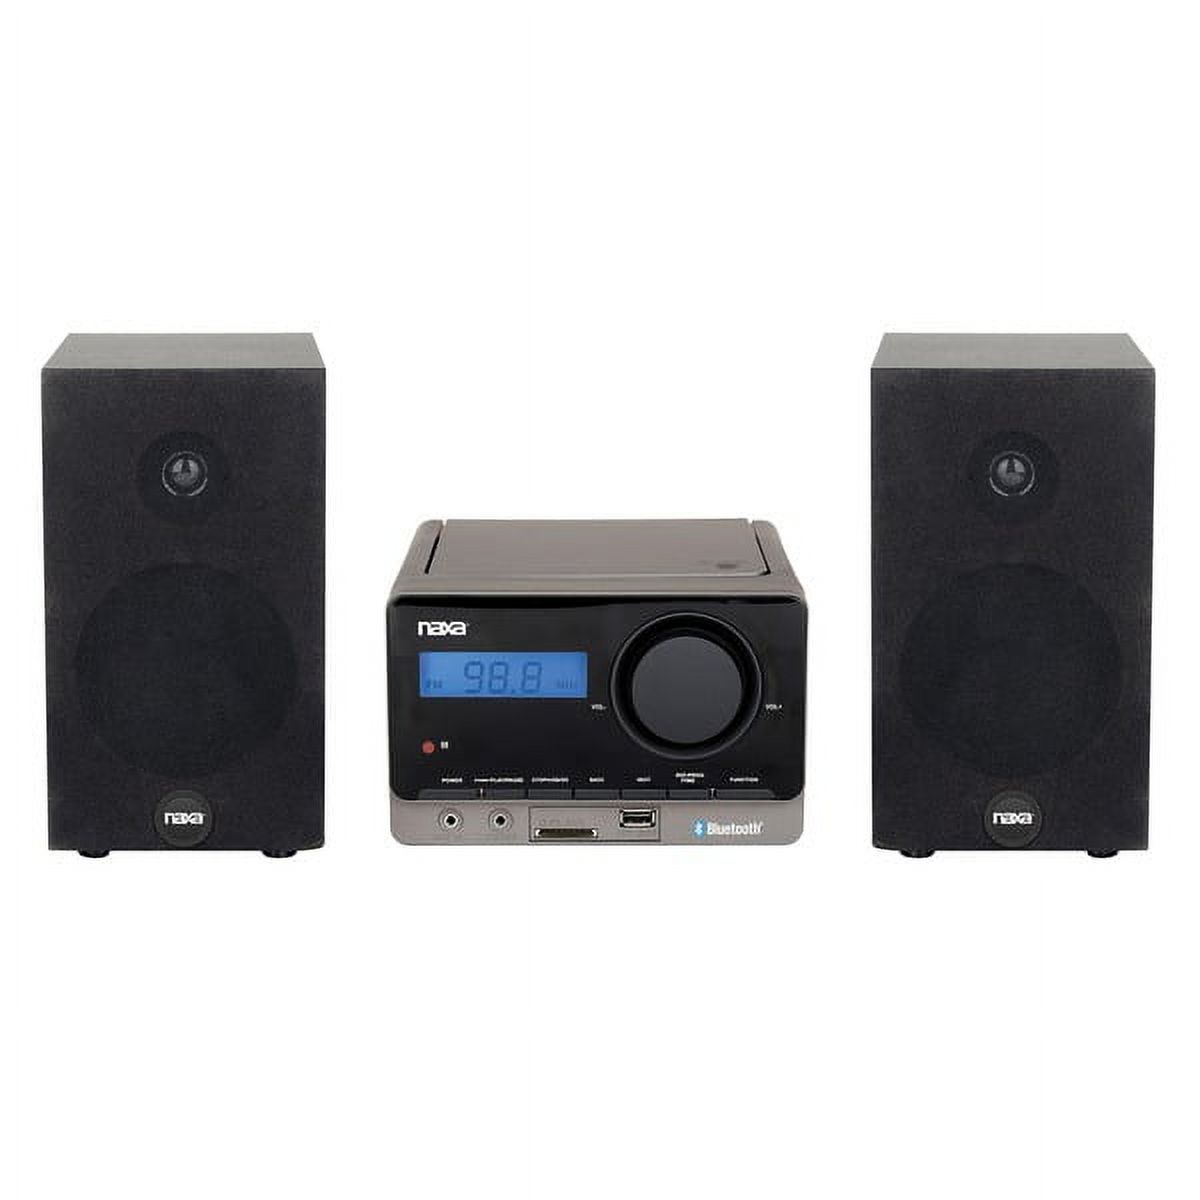 Naxa NS-442 MP3 Microsystem with Bluetooth - image 1 of 1